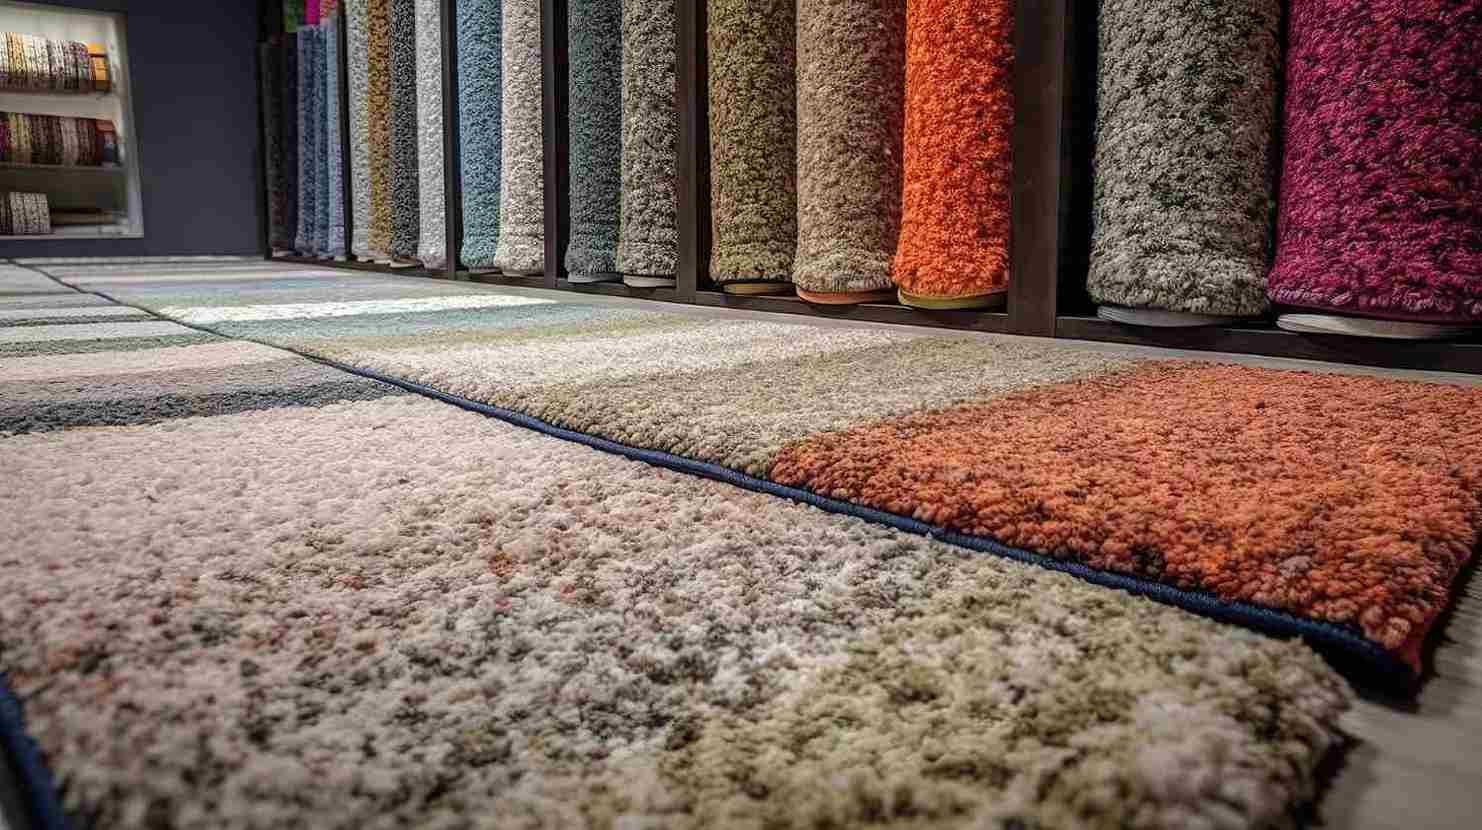 Types of Carpets Based on Fibers